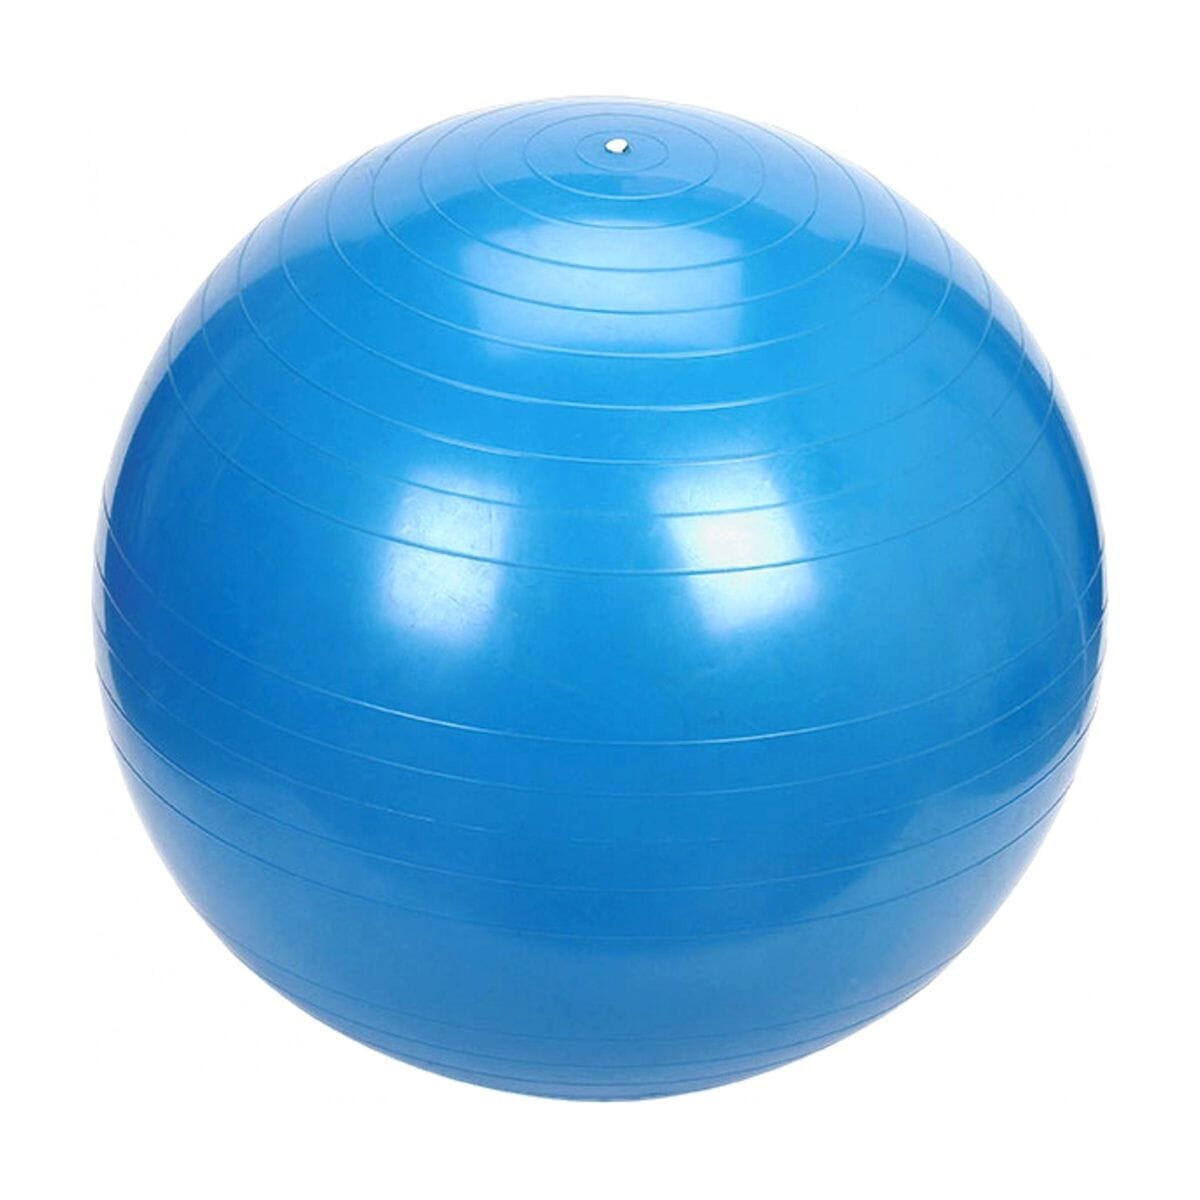 View Gym Balls Blue 650mm information